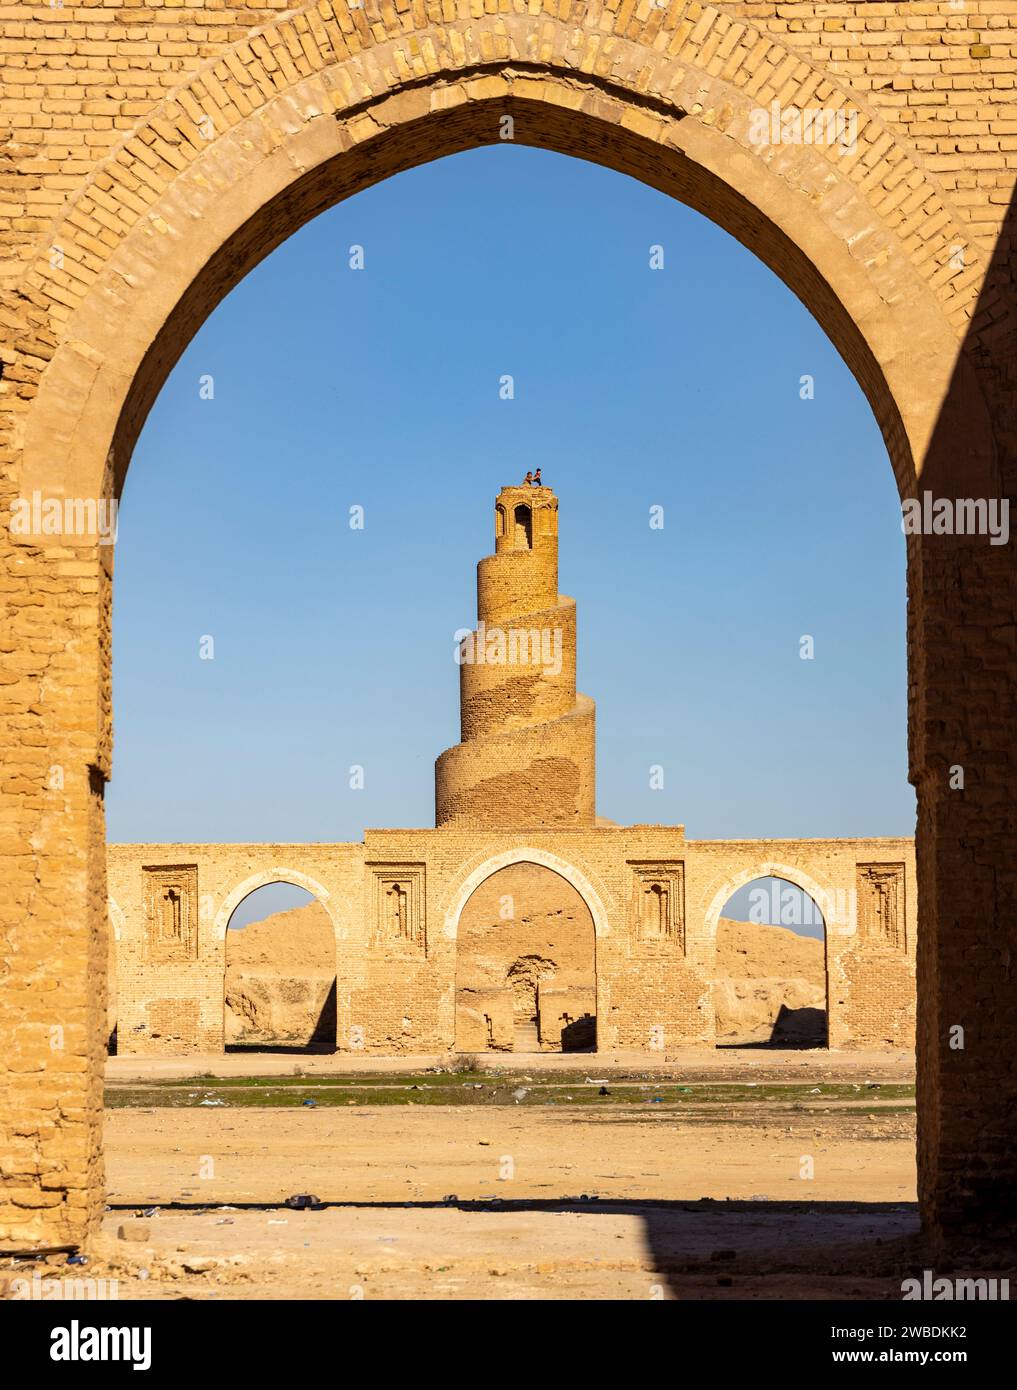 father and child, Iraqi tourists, on top of the minaret of the 9th century Abbasid Abu Dulaf Mosque, Samarra, Iraq Stock Photo